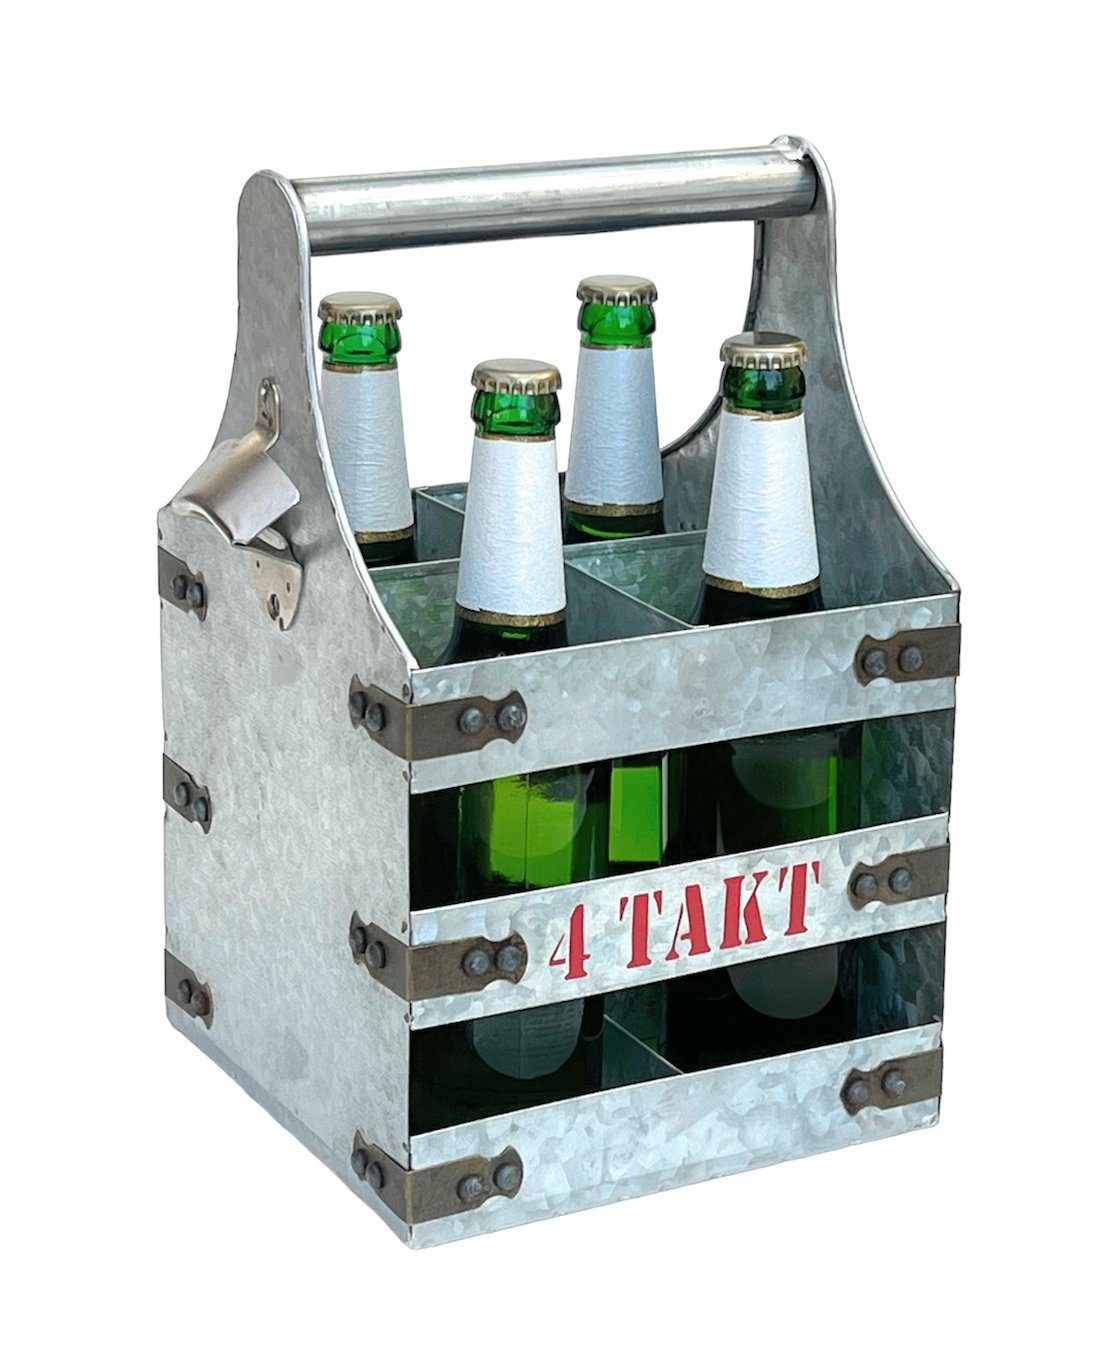 DanDiBo Flaschenträger Bierträger Metall mit Öffner Flaschenträger 4 Takt 96405 | Flaschenträger